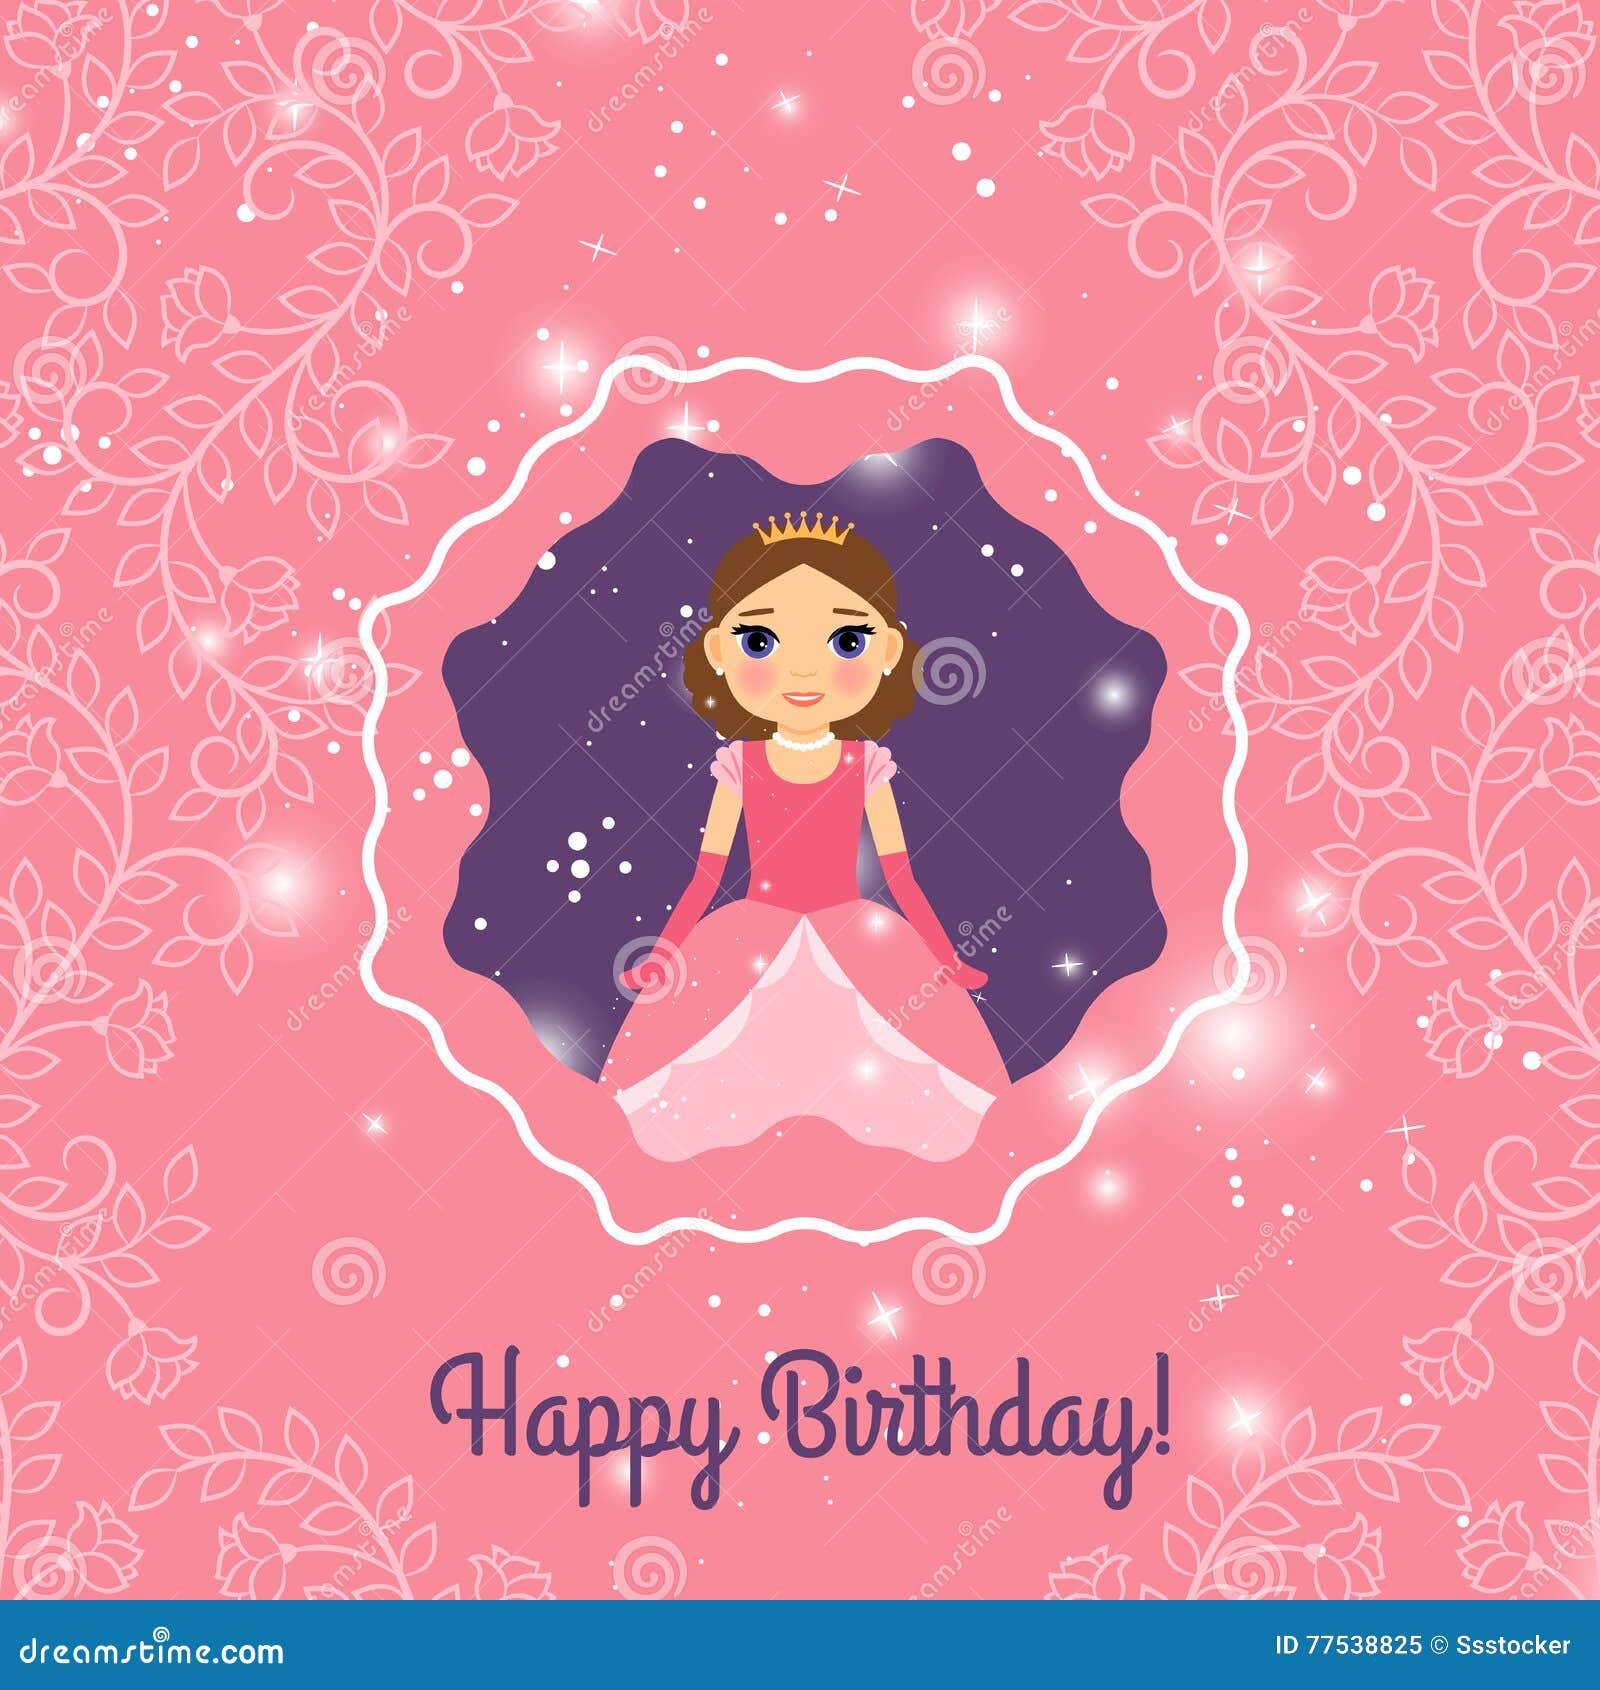 Happy Birthday Pink Princess Greeting Card Stock Vector - Illustration ...